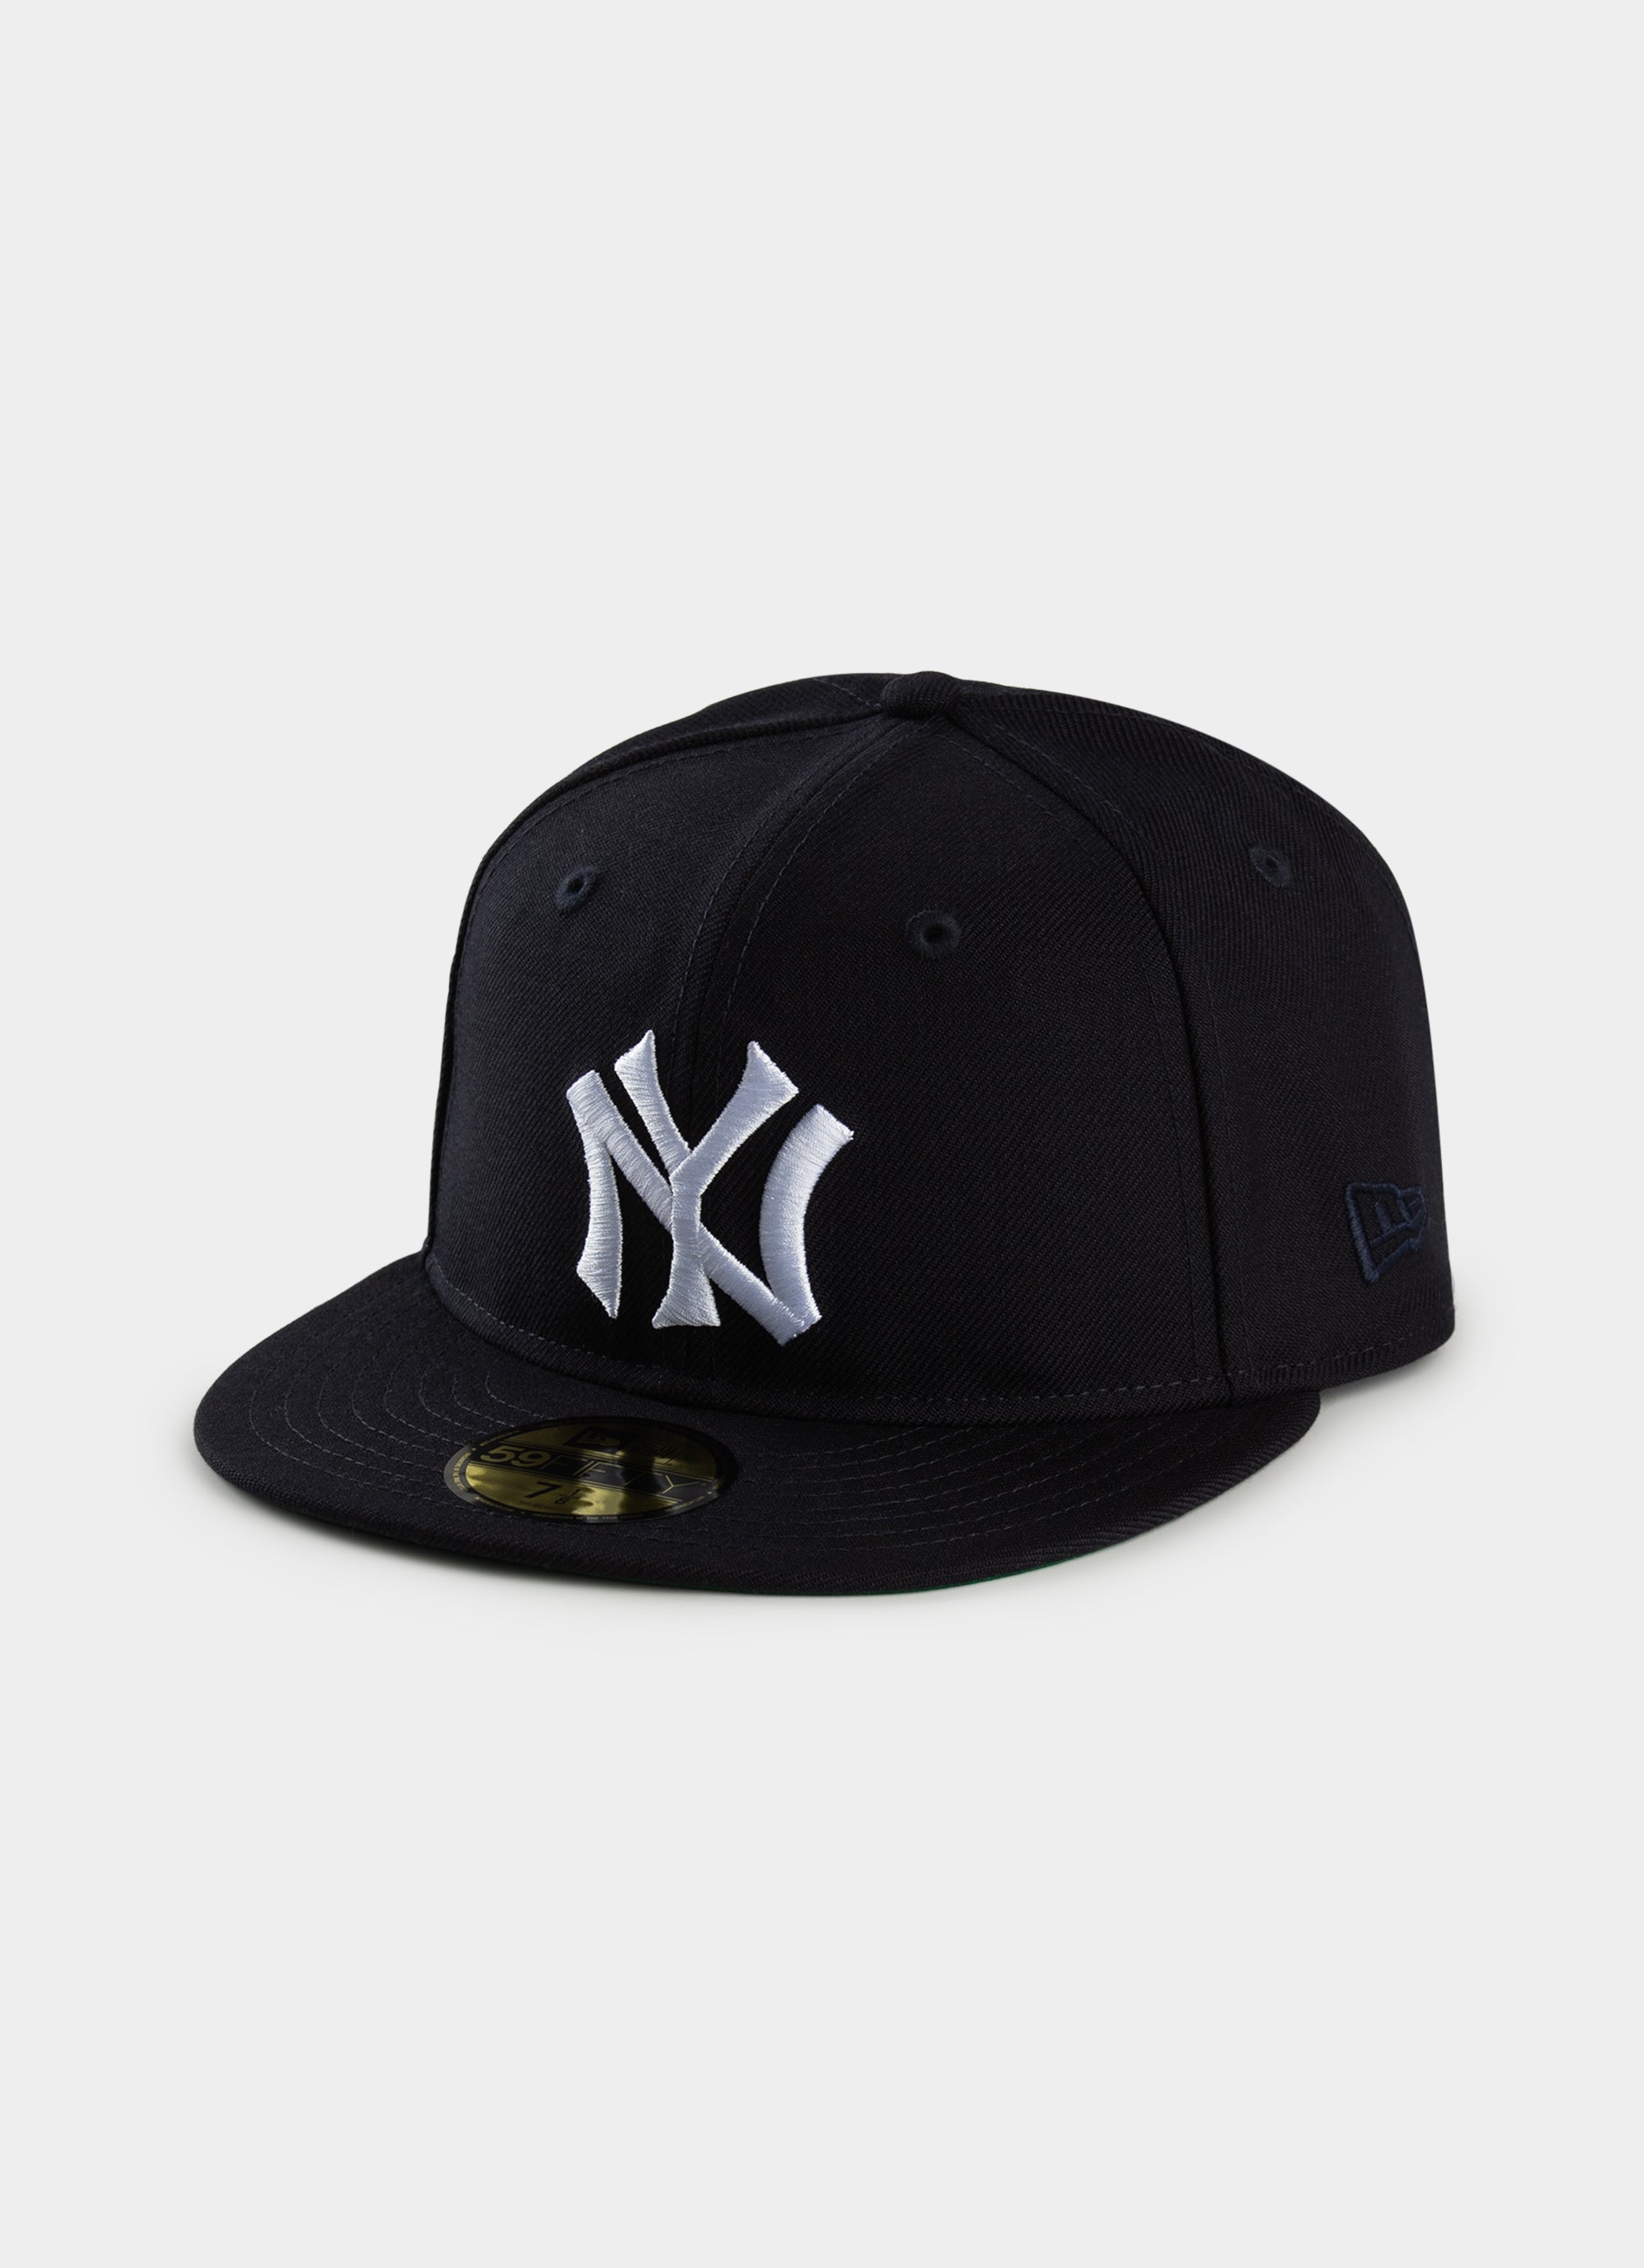 Men’s New Era Cap Black | Kelly Green Metallic MLB NY Yankees 59FIFTY